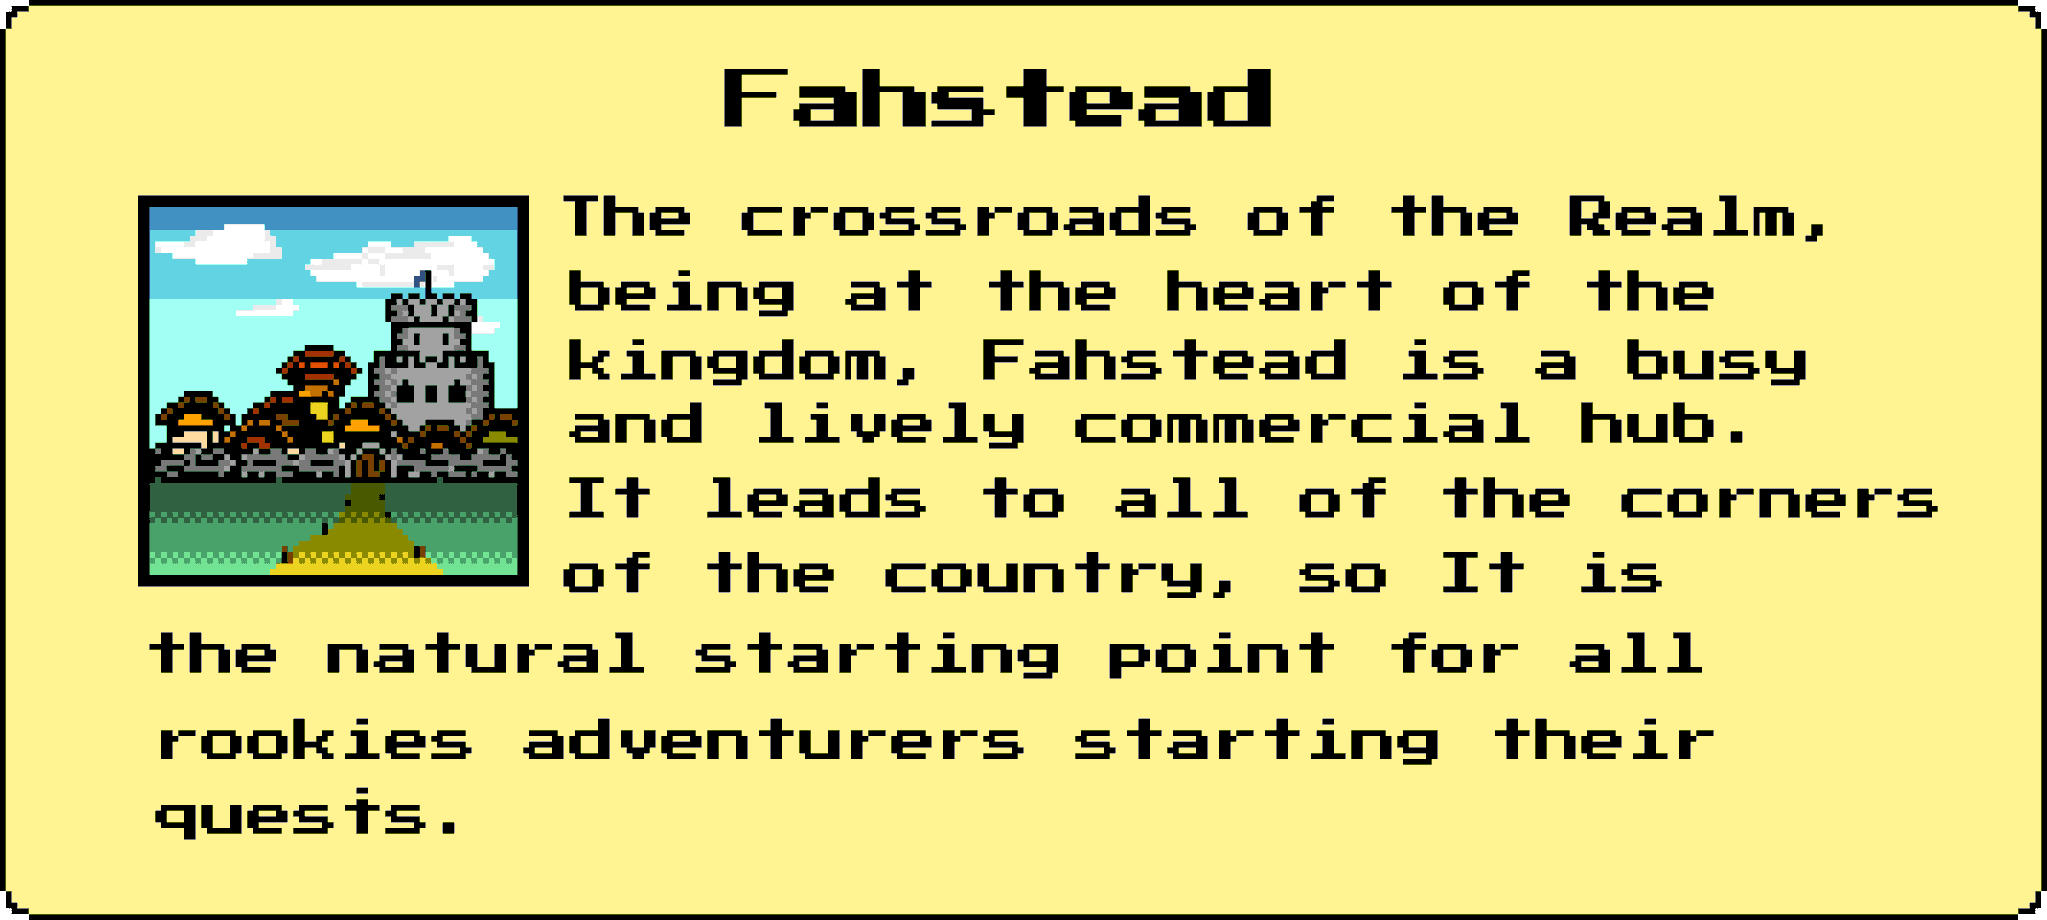 Pomodoro Adventures lore card: Fahstead 